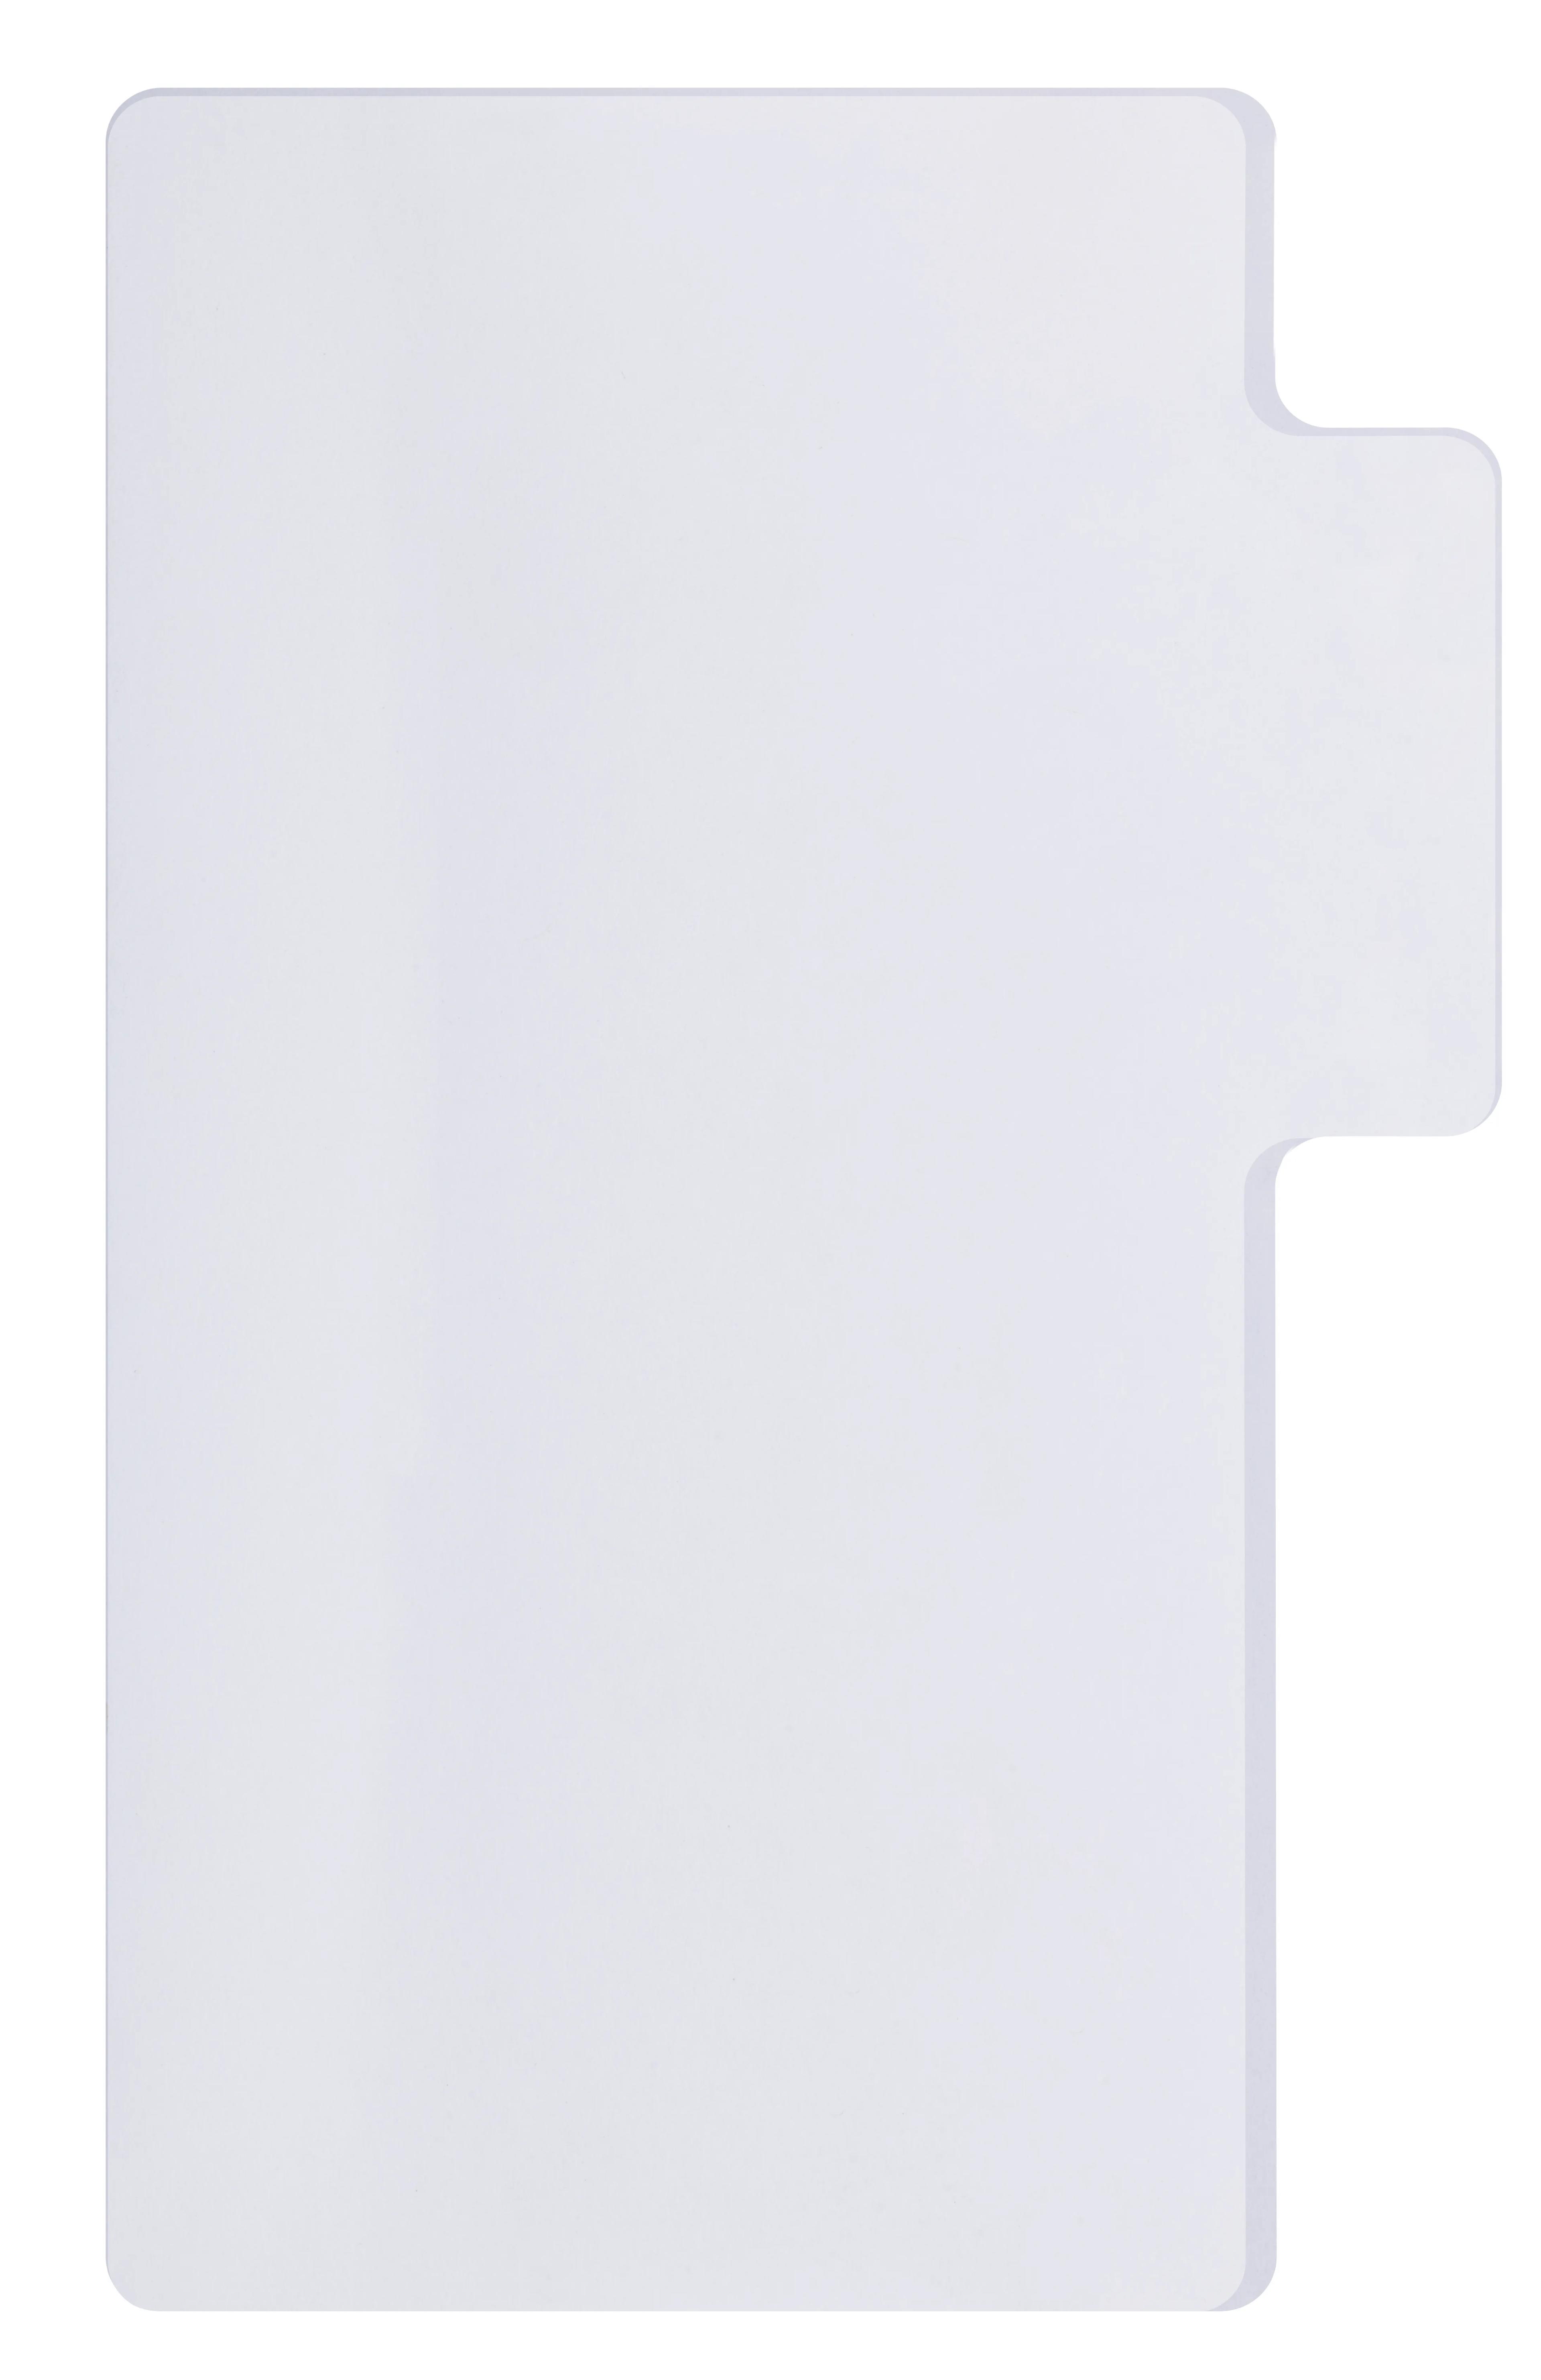 Souvenir® Sticky Note™ Memo Tabs™ Pad, 25 sheet